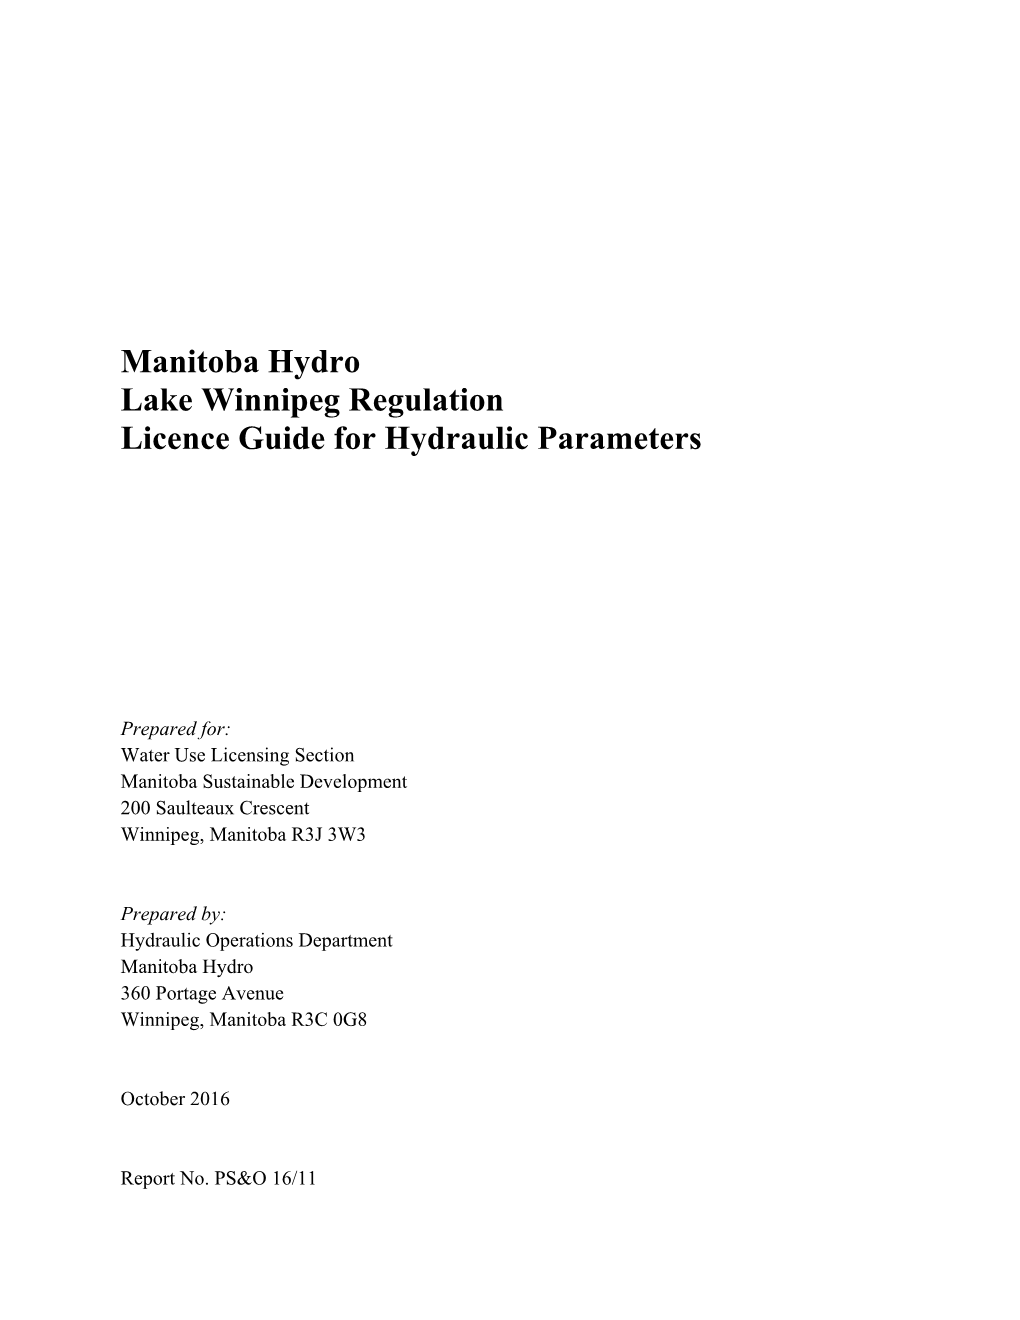 Manitoba Hydro Lake Winnipeg Regulation Licence Guide for Hydraulic Parameters